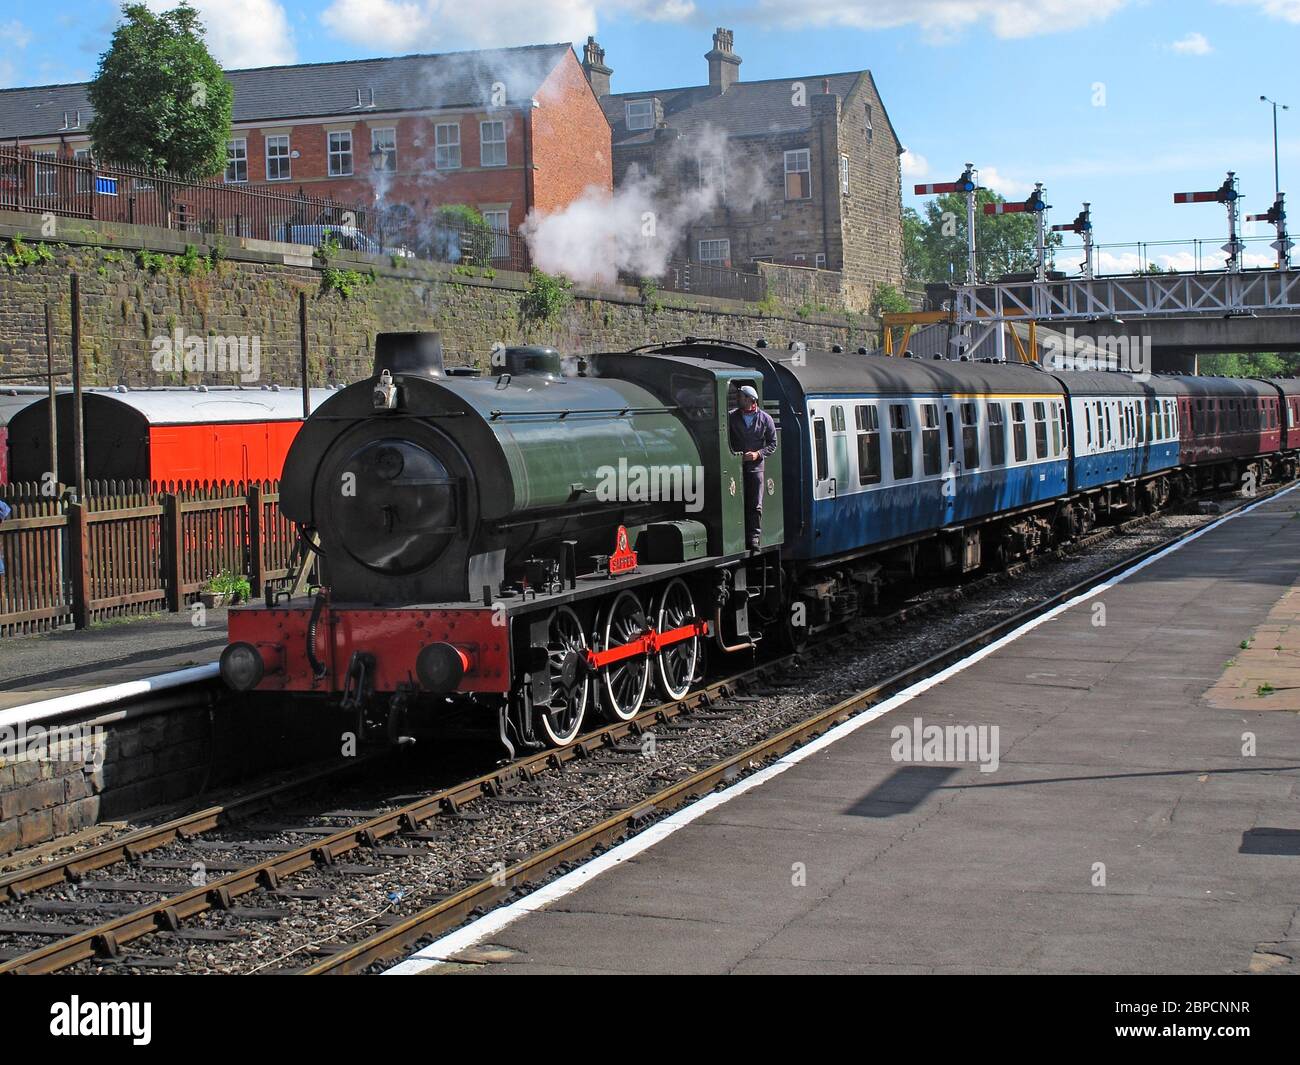 ELR,East Lancs Railway, East Lancashire Railway Bury station, greater Manchester,England,UK - Sapper Green Engine Stock Photo